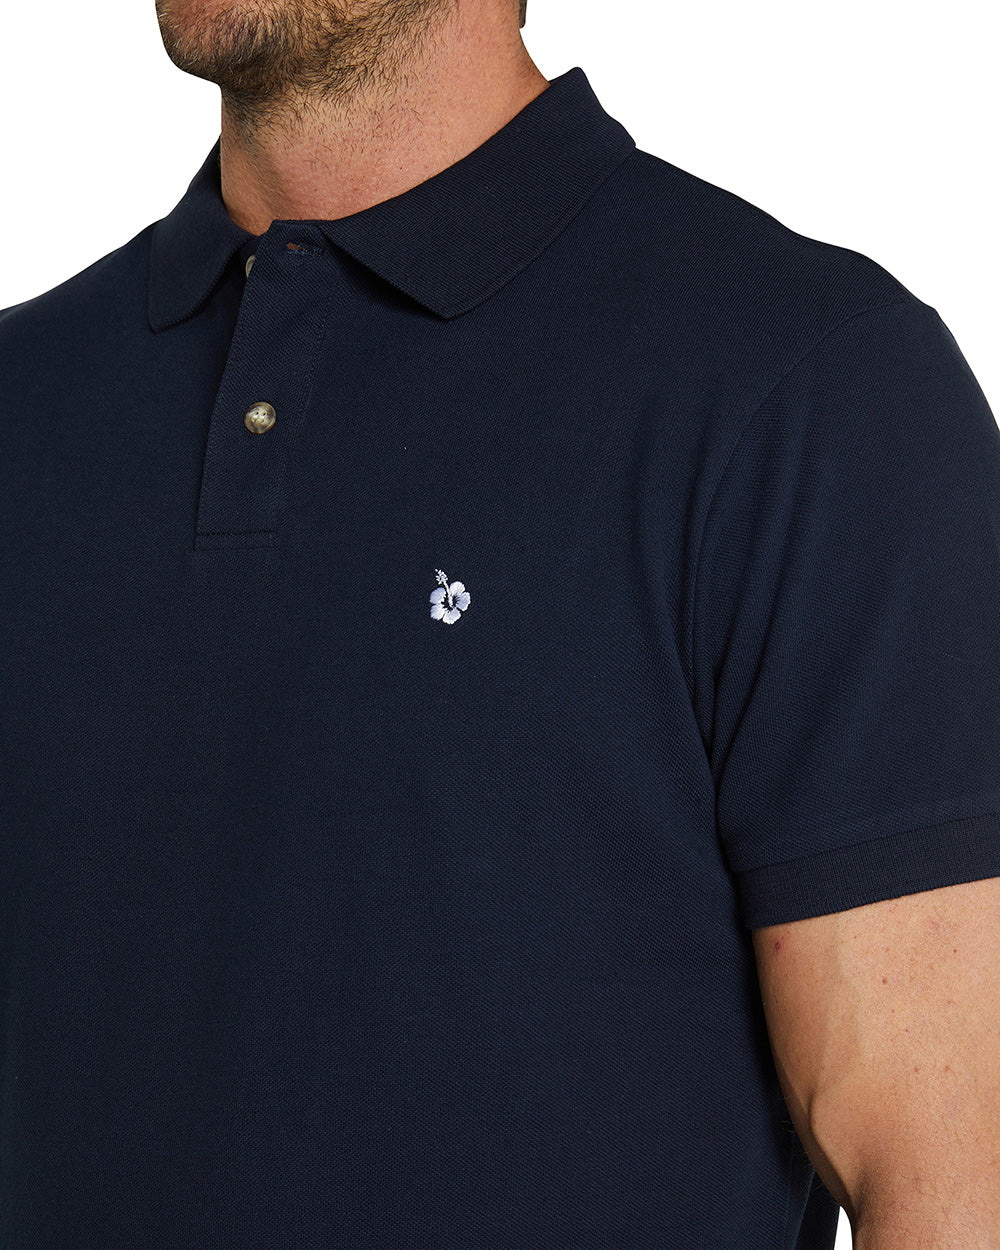 Polo Shirt - Classic - Navy